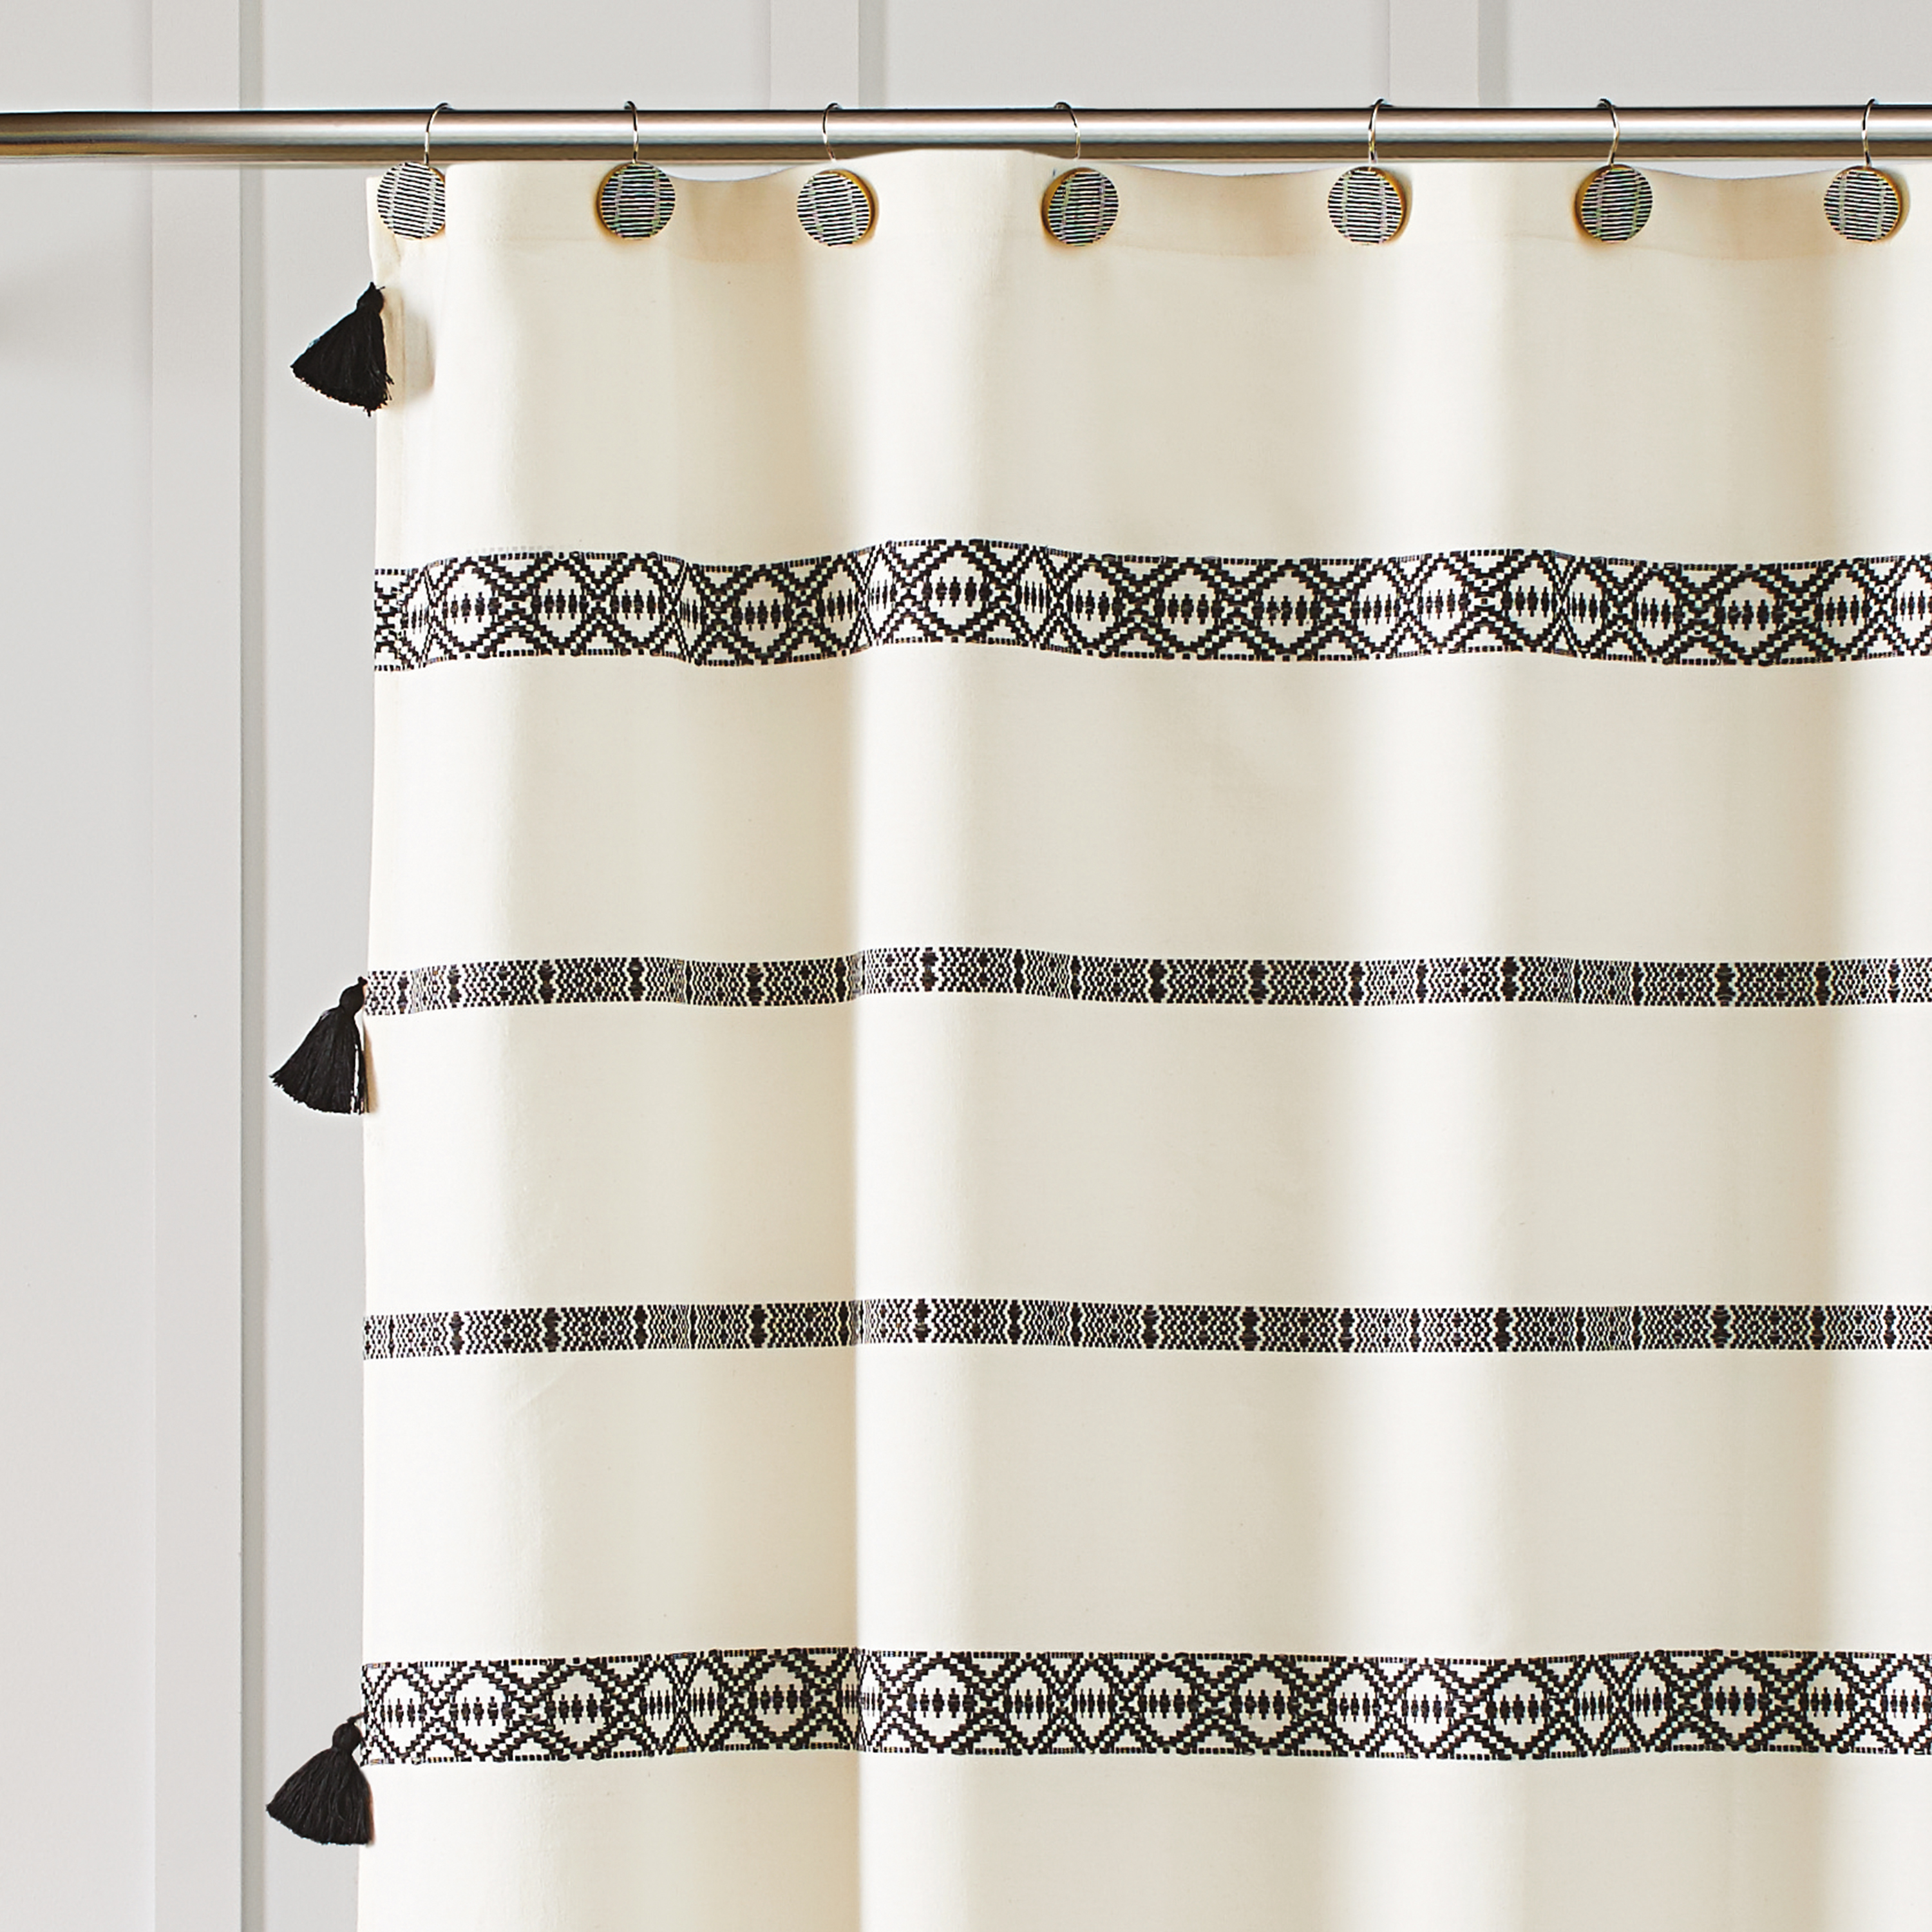 GALMAXS7 Boho Shower Curtain/ Black White Modern Fabric Shower Curtains for Bathroom Chic Tribal Geometric Striped Decor Polyester Bath Curtain Set with Hooks Heavy Duty Waterproof 72x72,Tassel